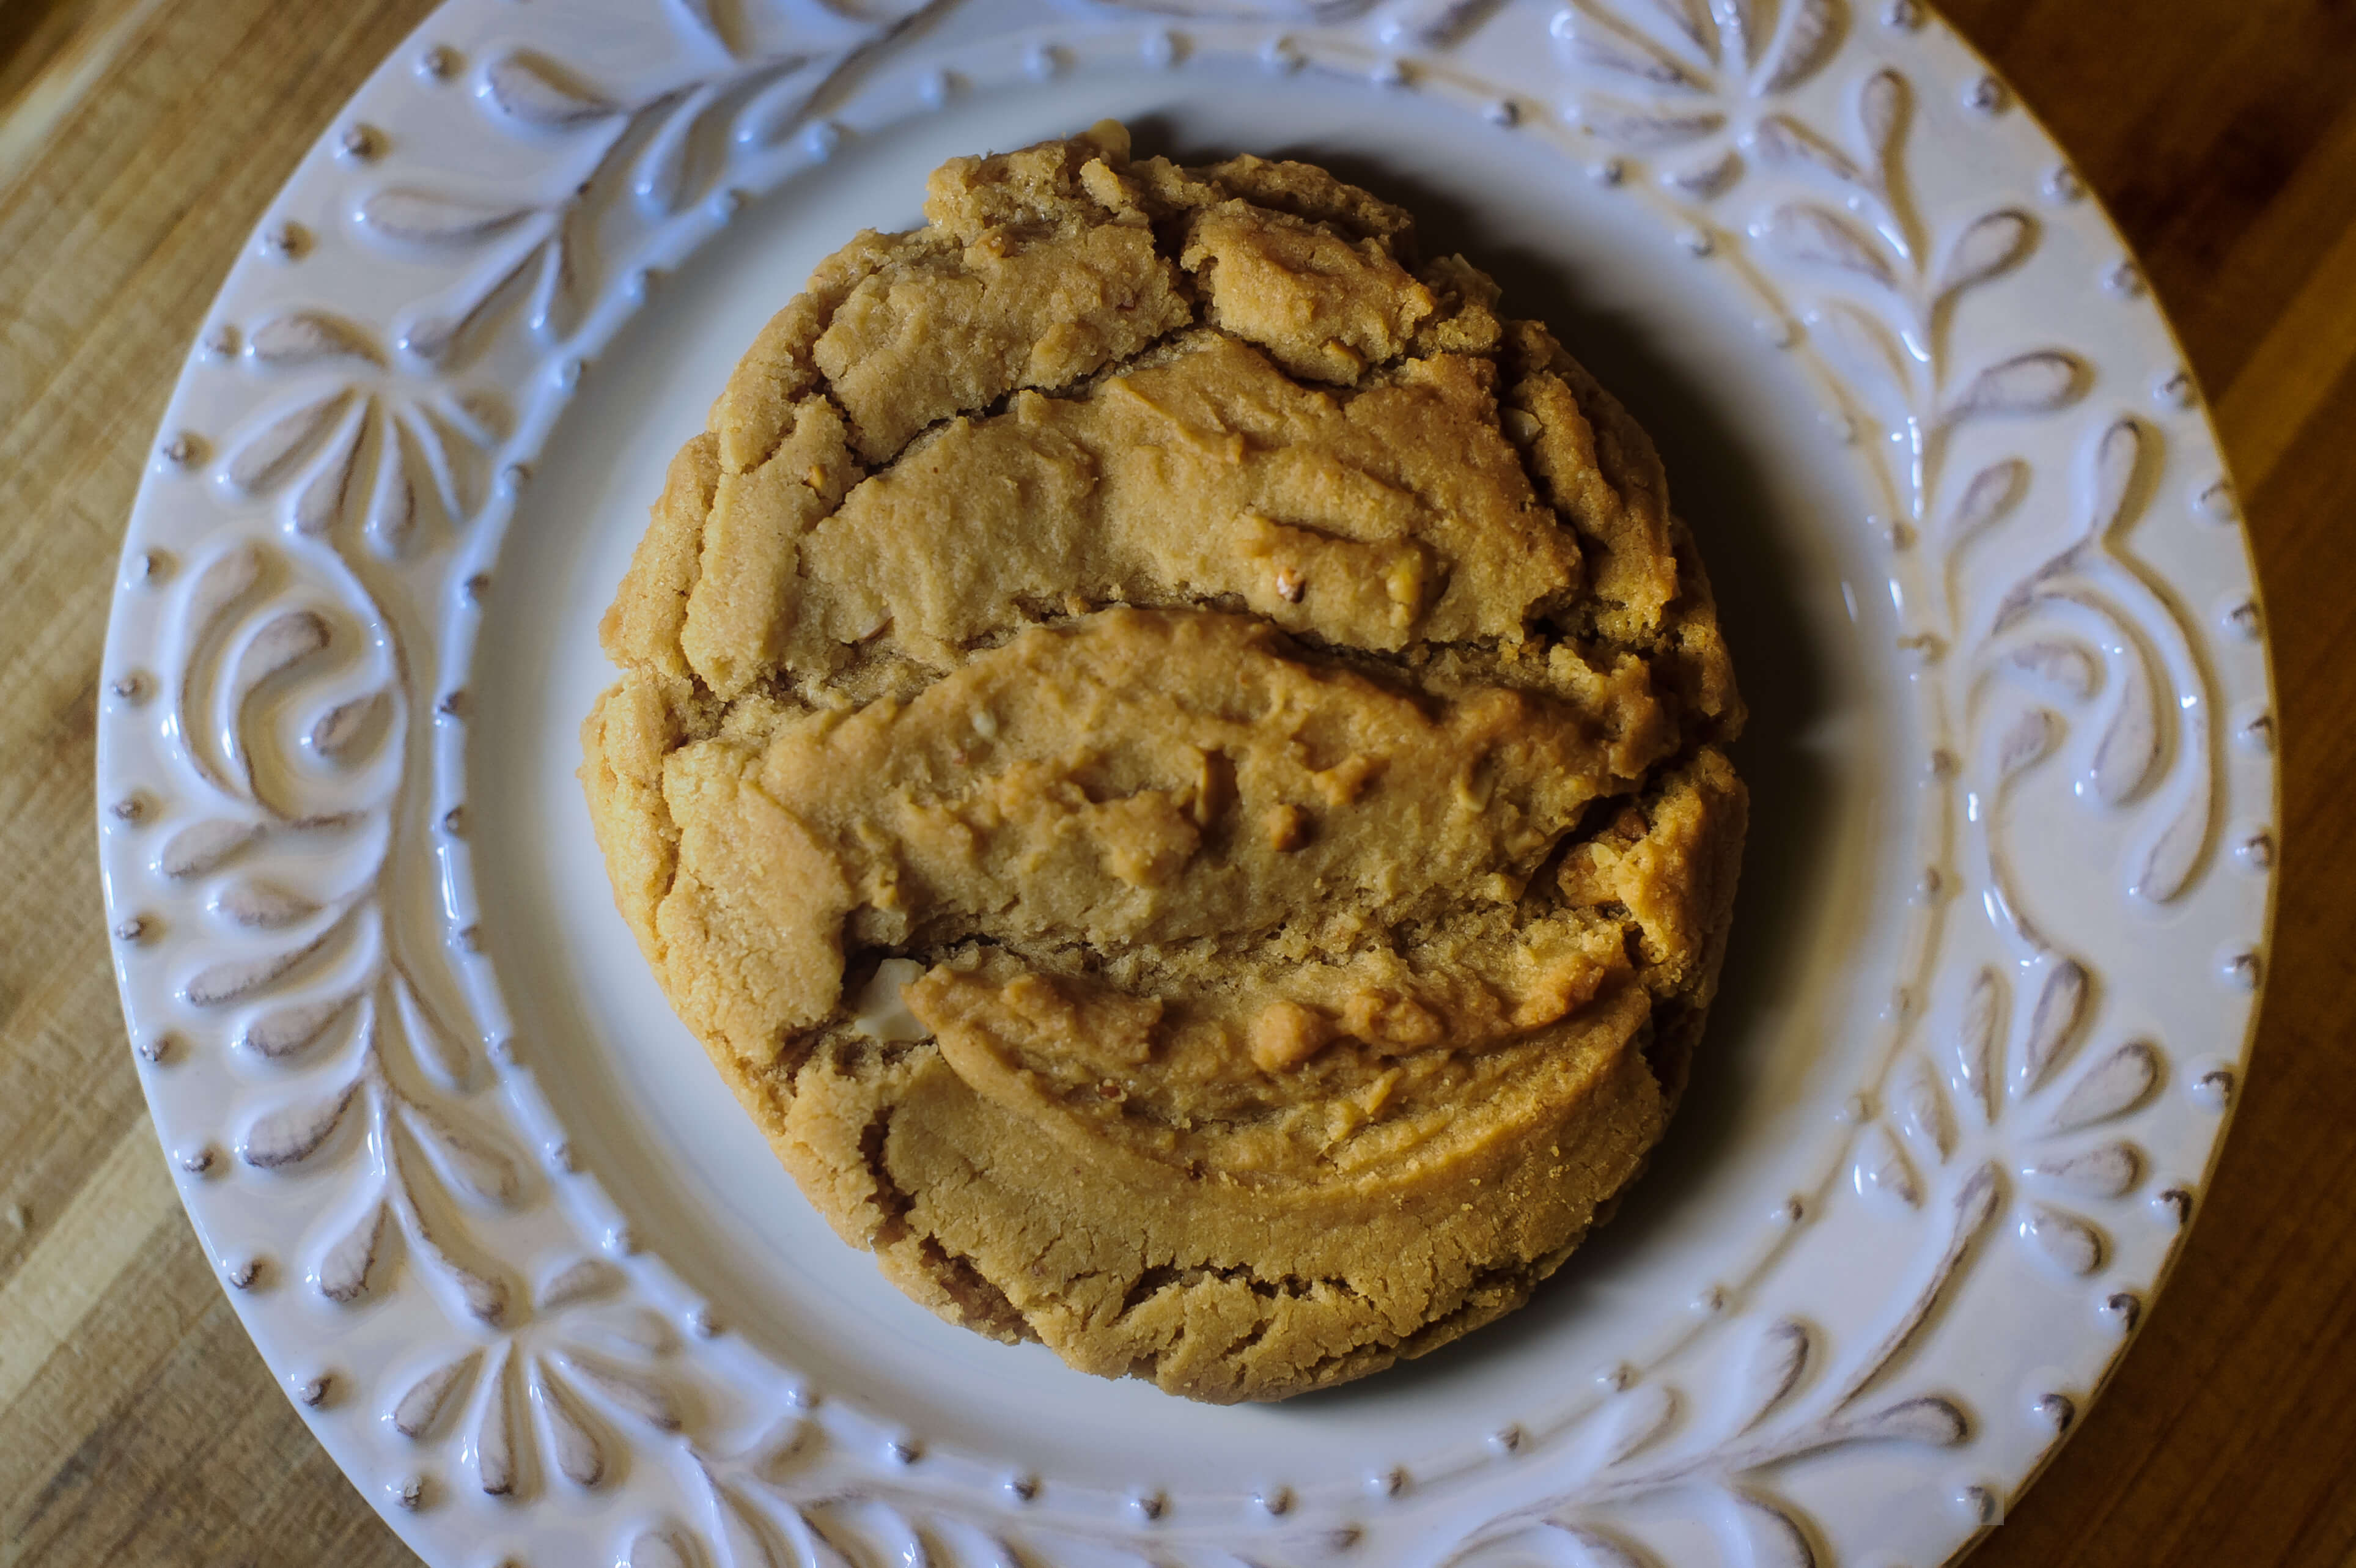 Peanat butter cookie